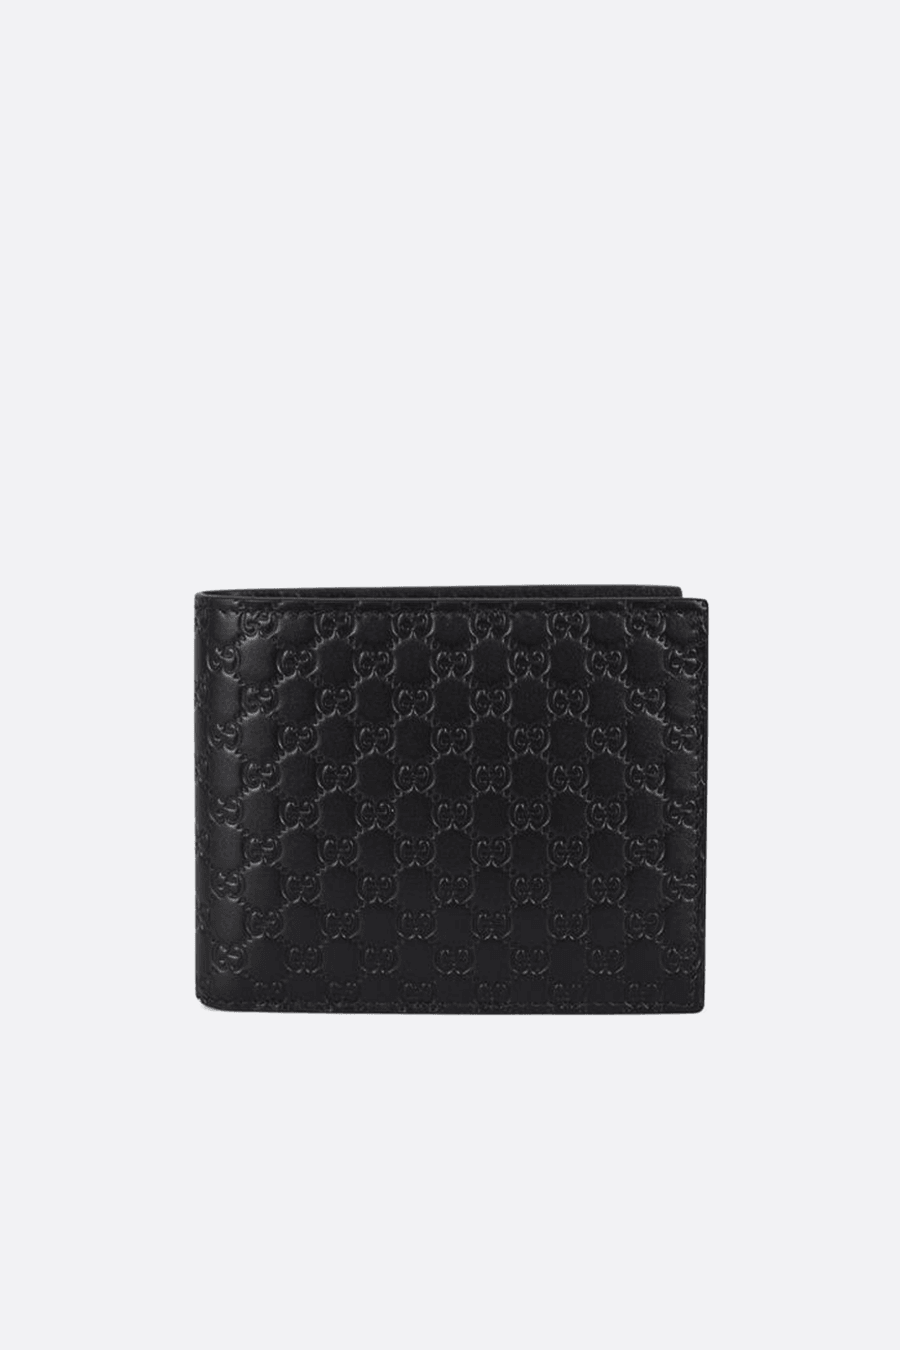 Gucci Men's Microguccissima GG Bifold Wallet